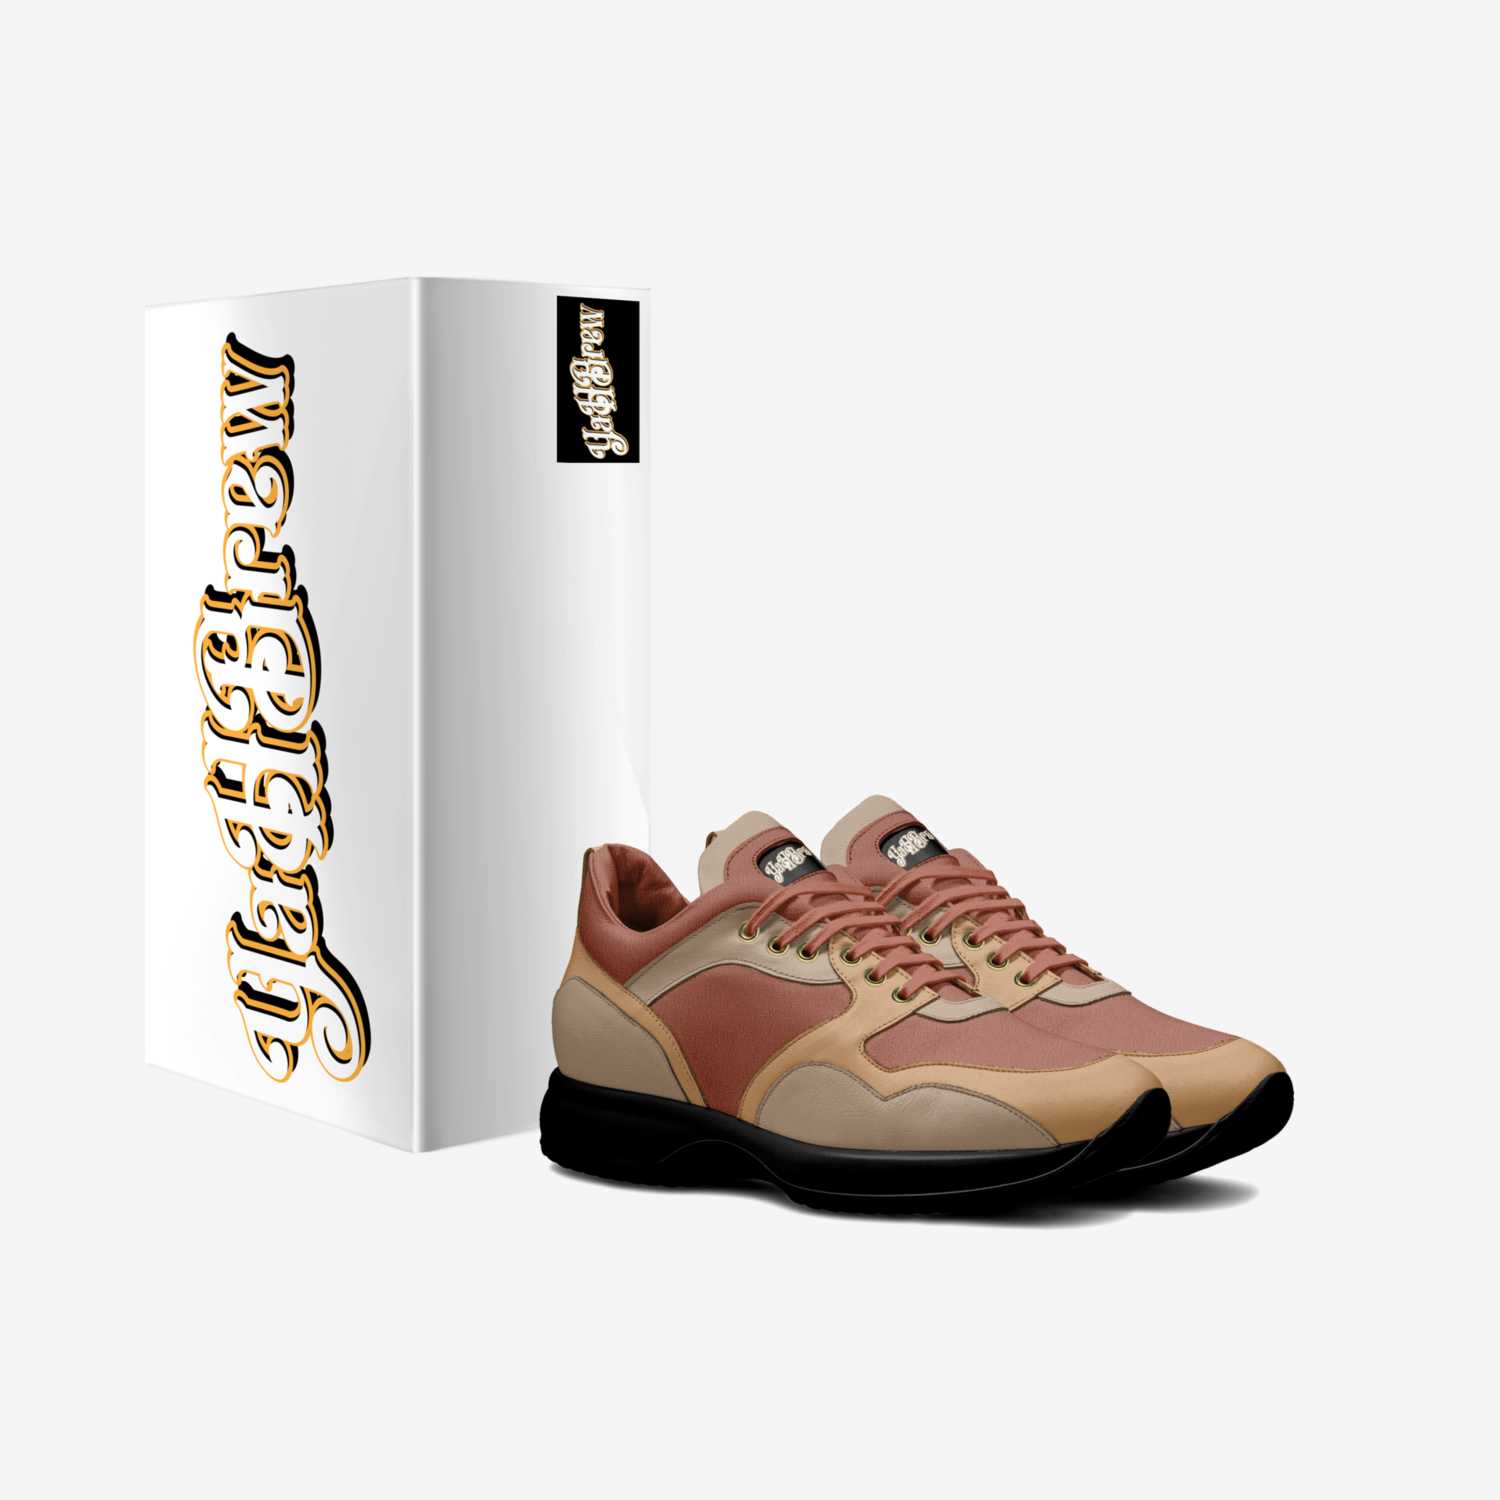 Qam Yahsharala custom made in Italy shoes by Adrian Jackson | Box view